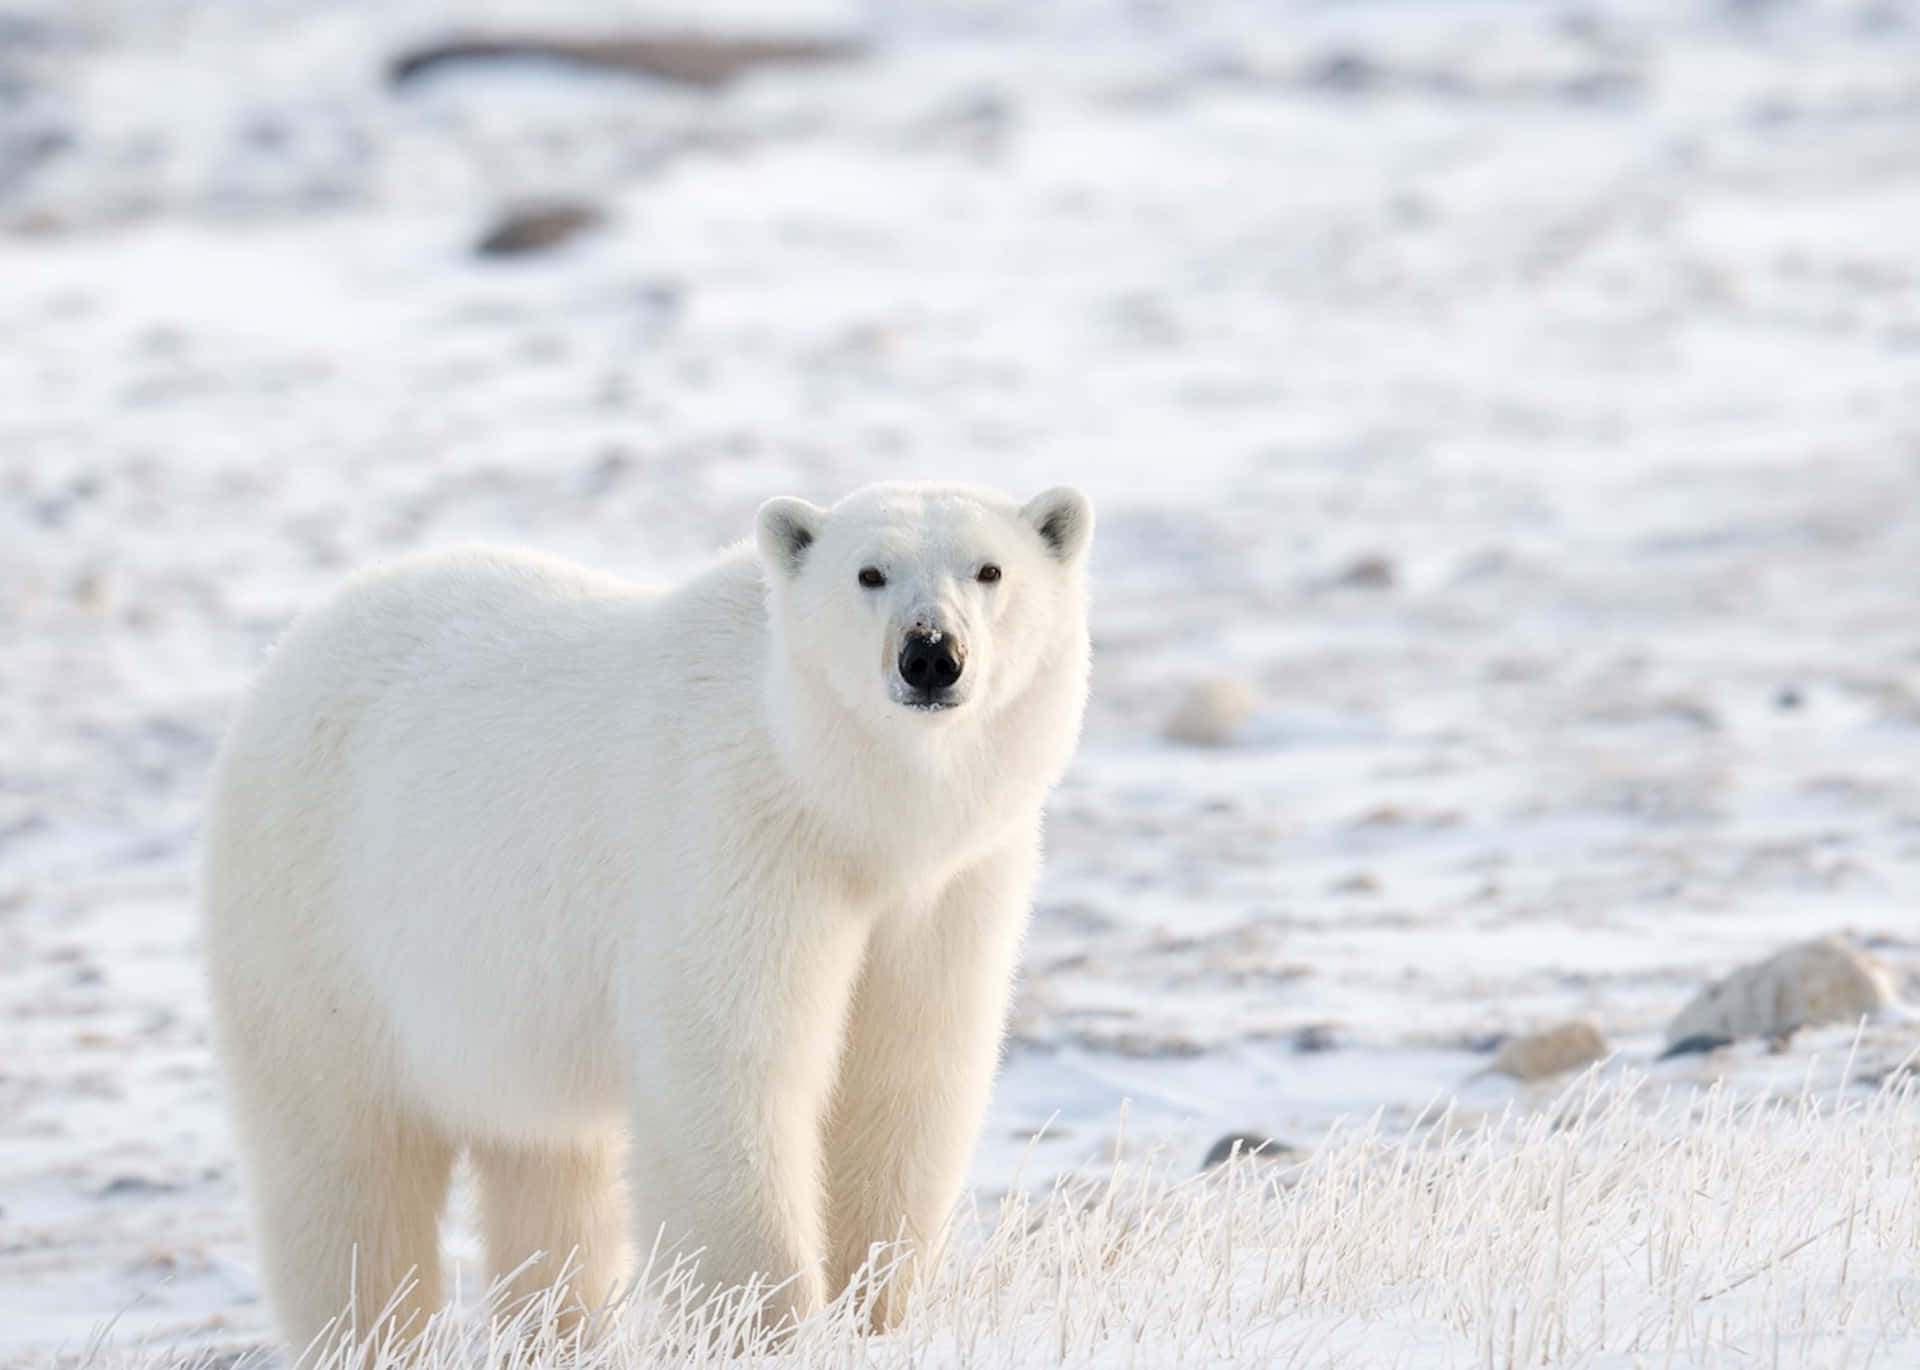 “A Majestic Polar Bear in Its Natural Habitat”